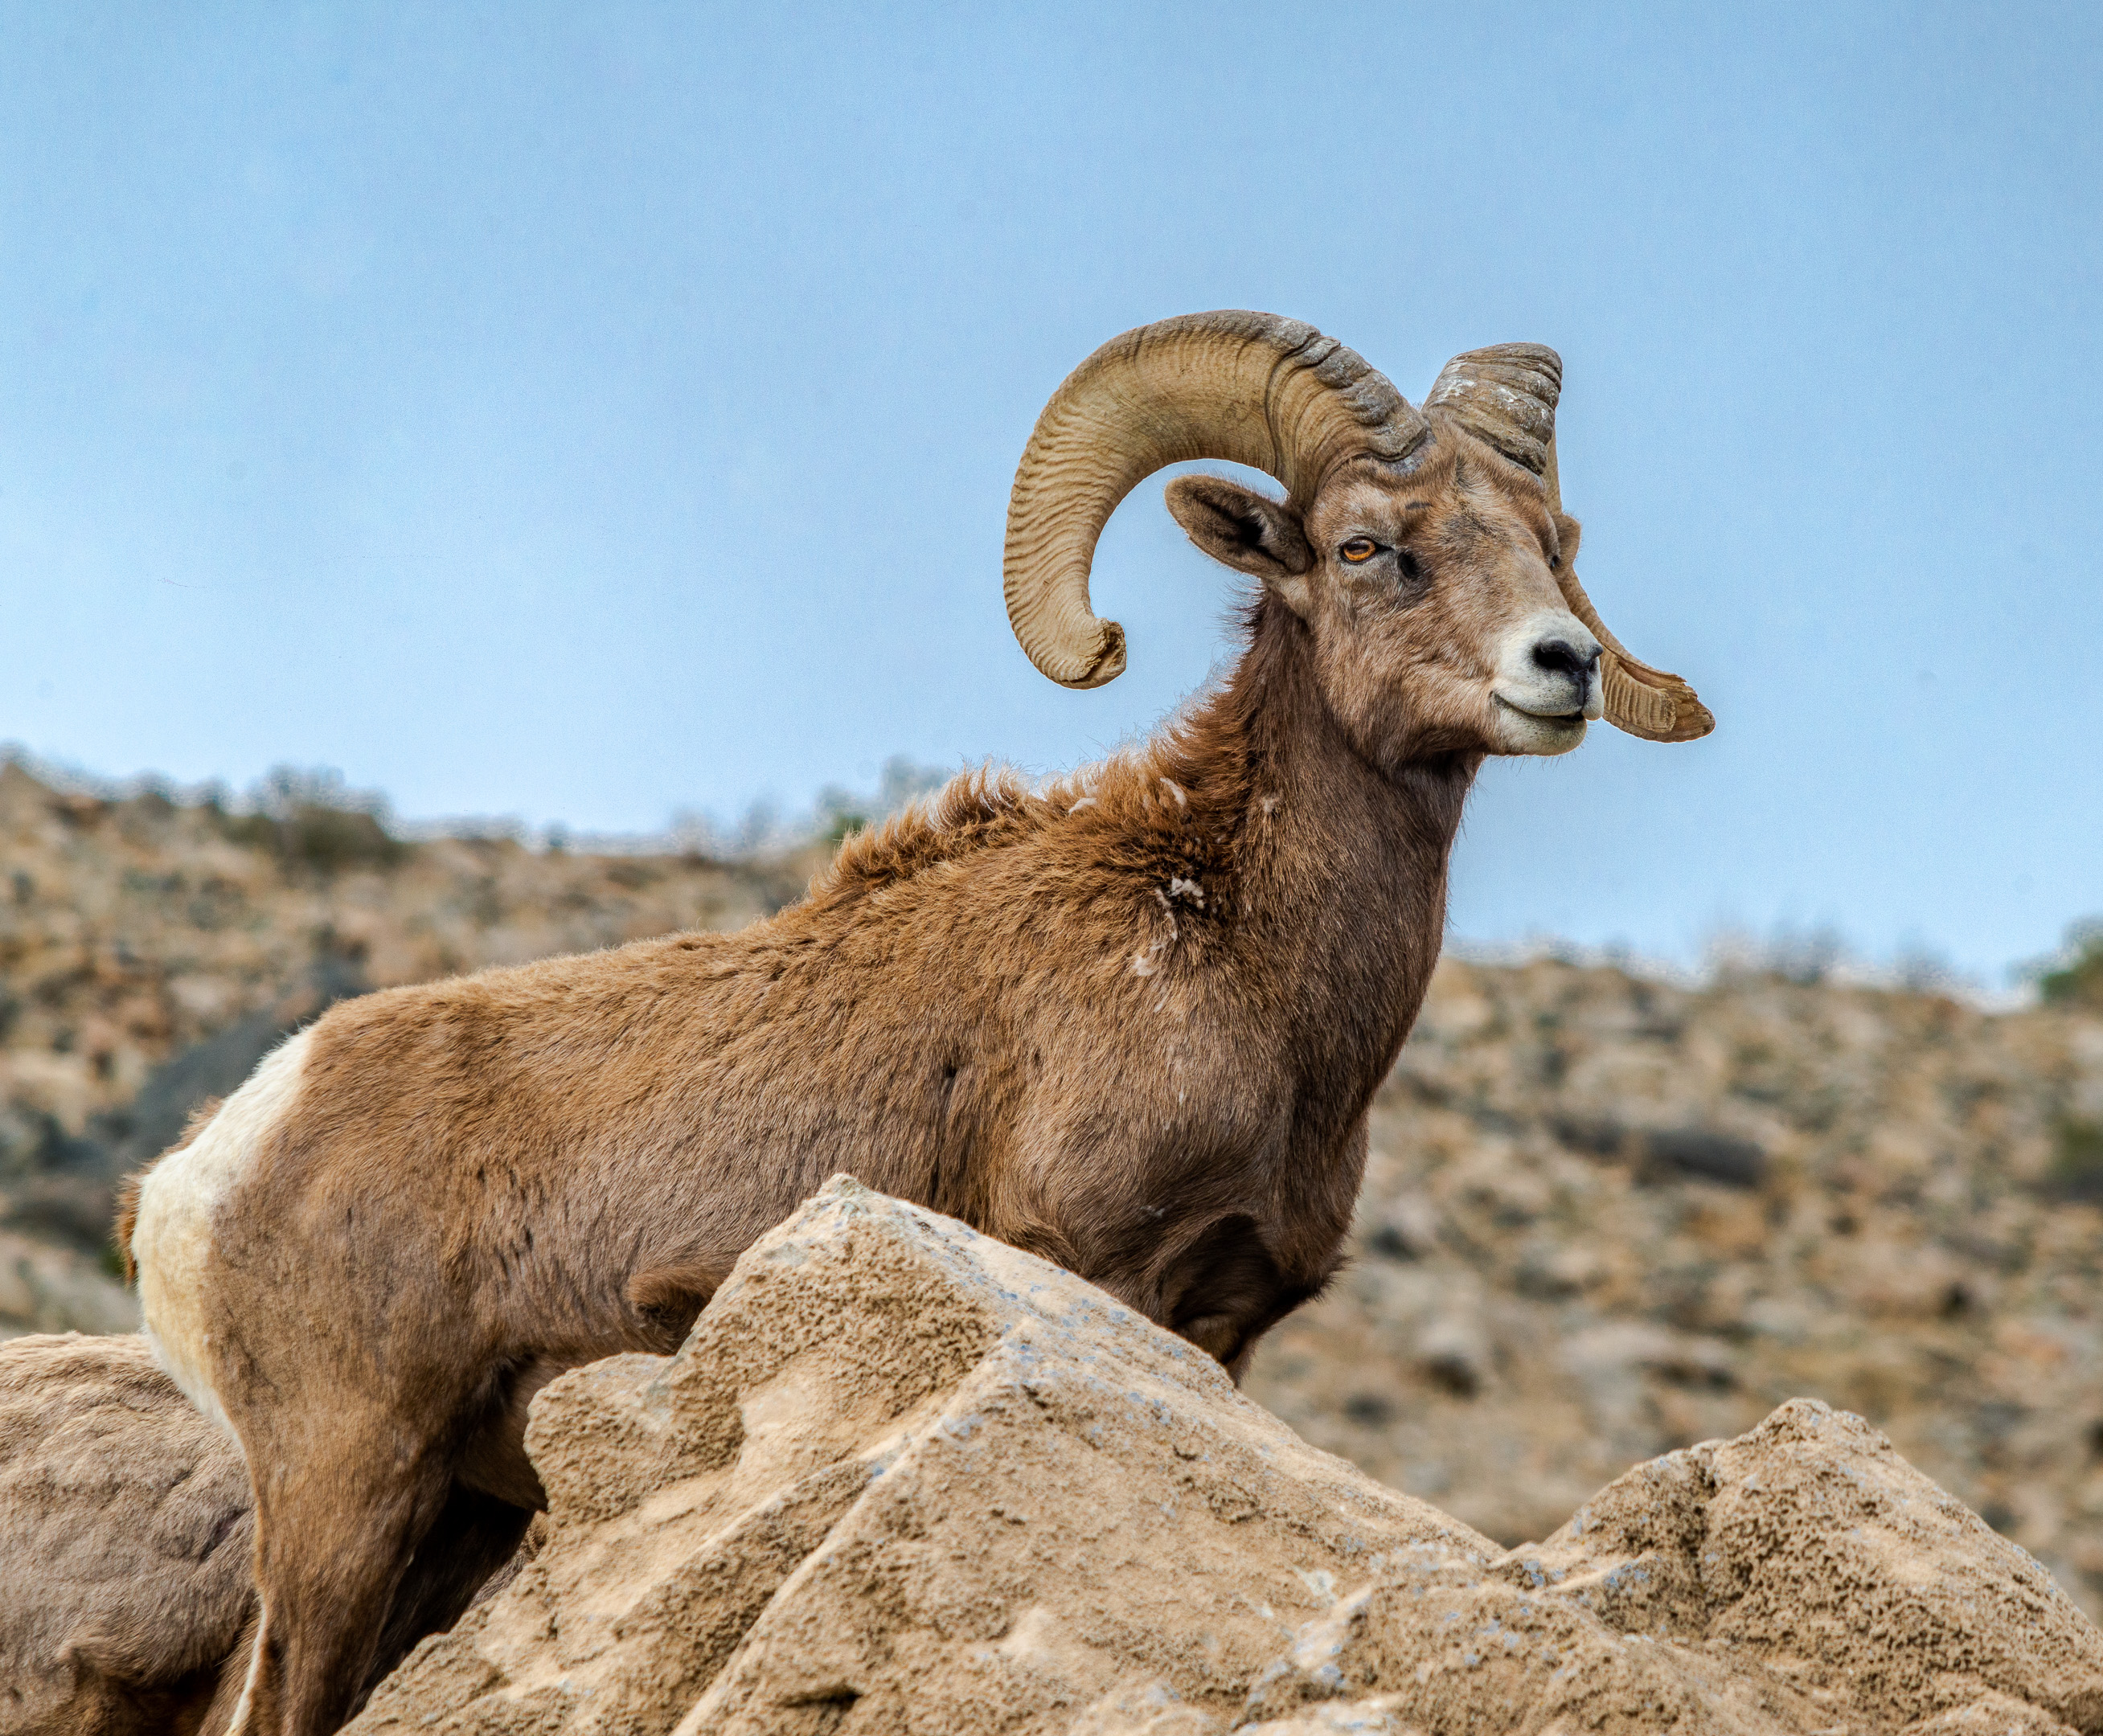 Desert bighorn sheep standing on a rock ledge